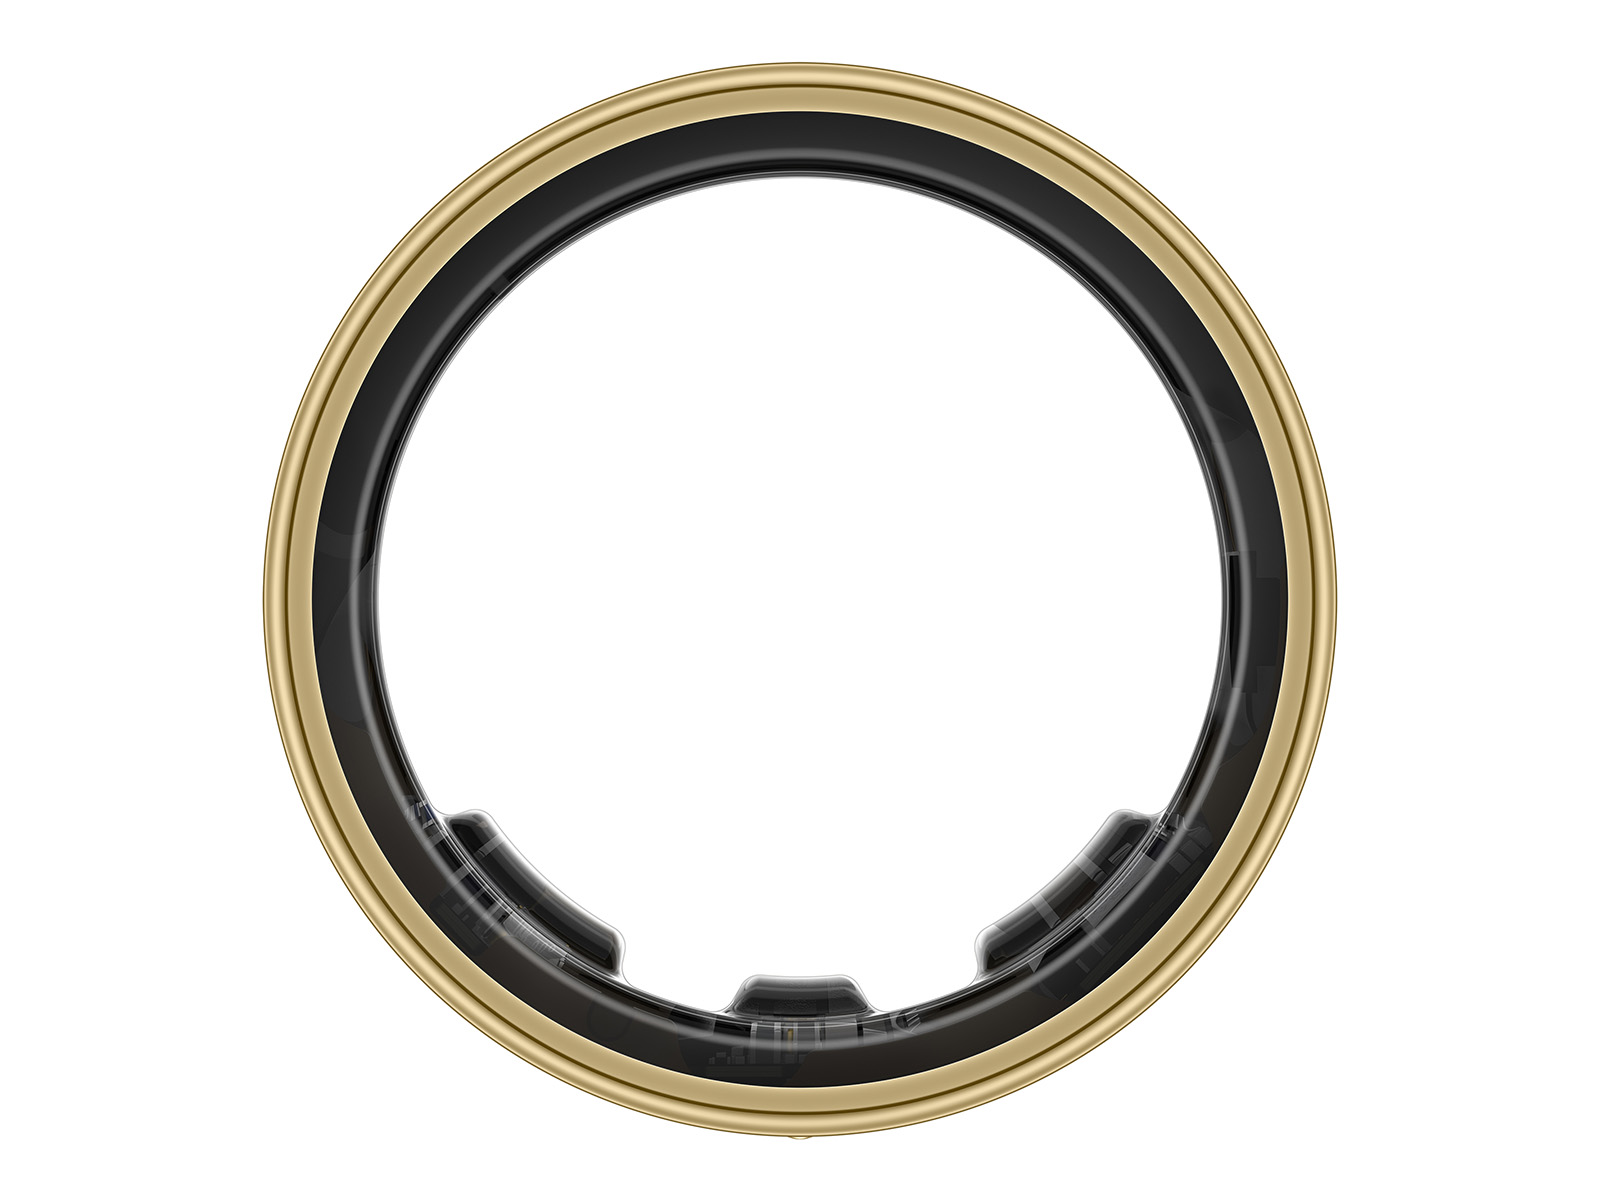 Thumbnail image of Galaxy Ring, Size 11, Titanium Gold